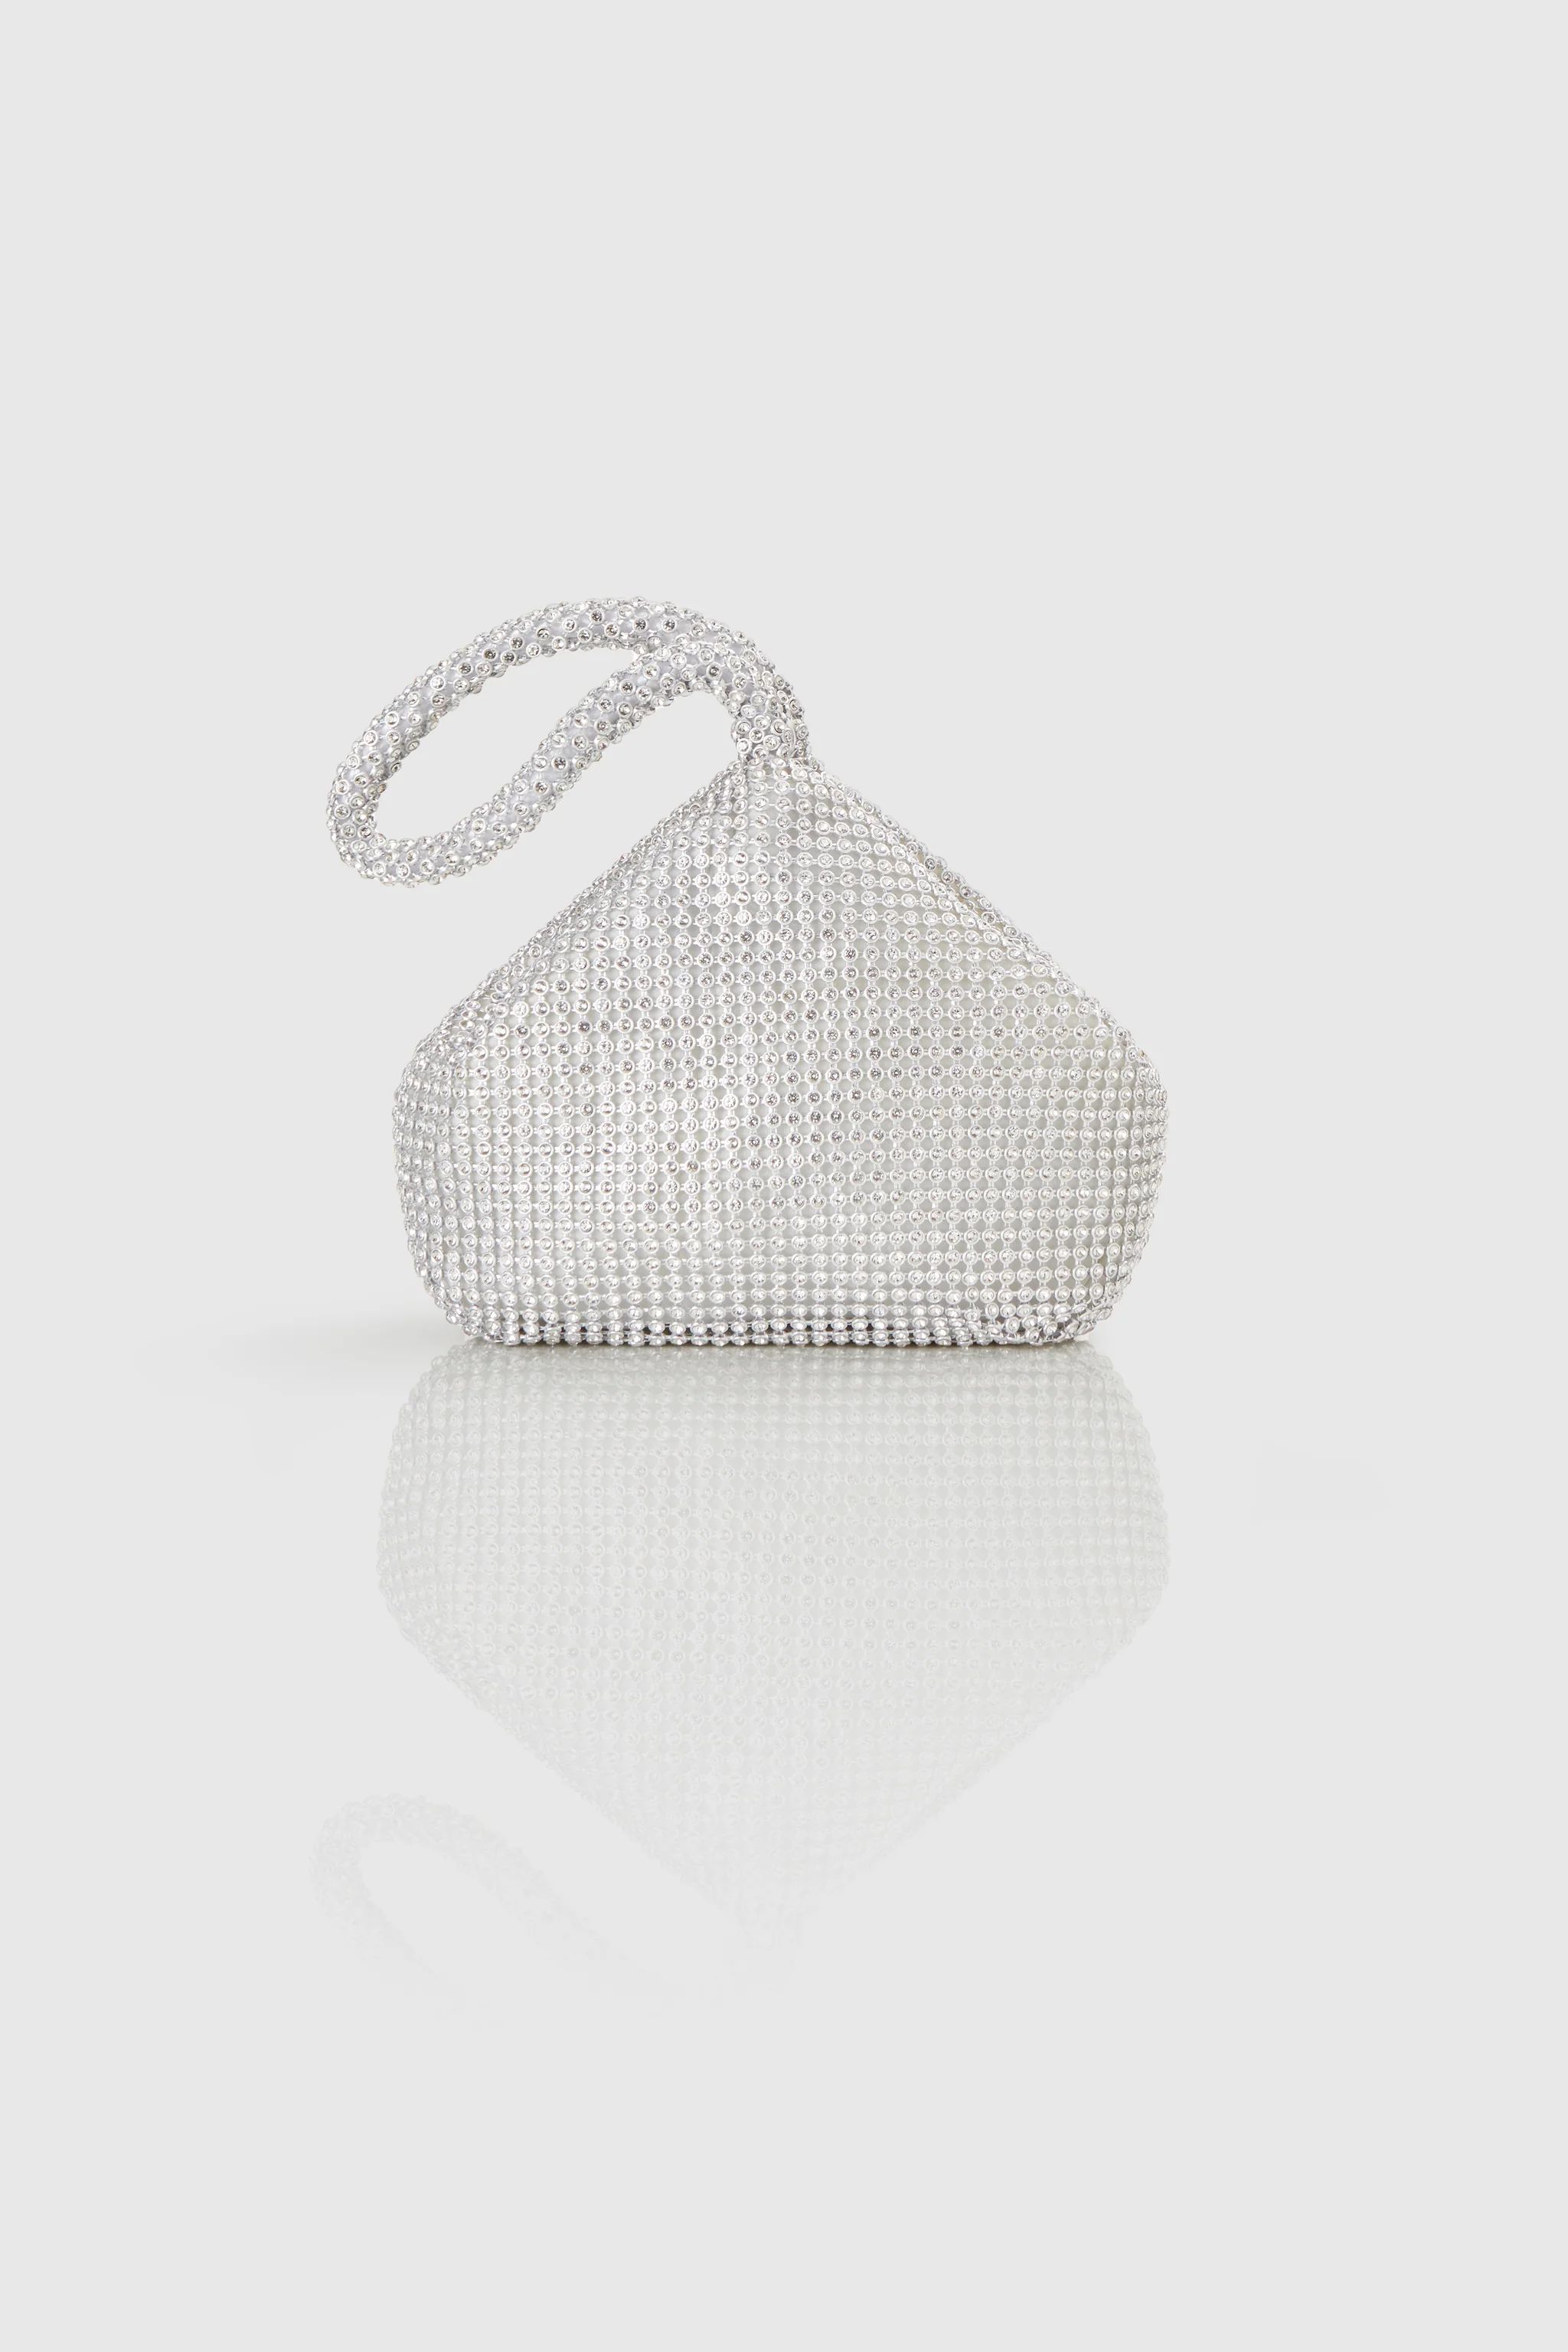 Shop Handbags - Gatsby Themed Evening Clutch | BABEYOND | BABEYOND